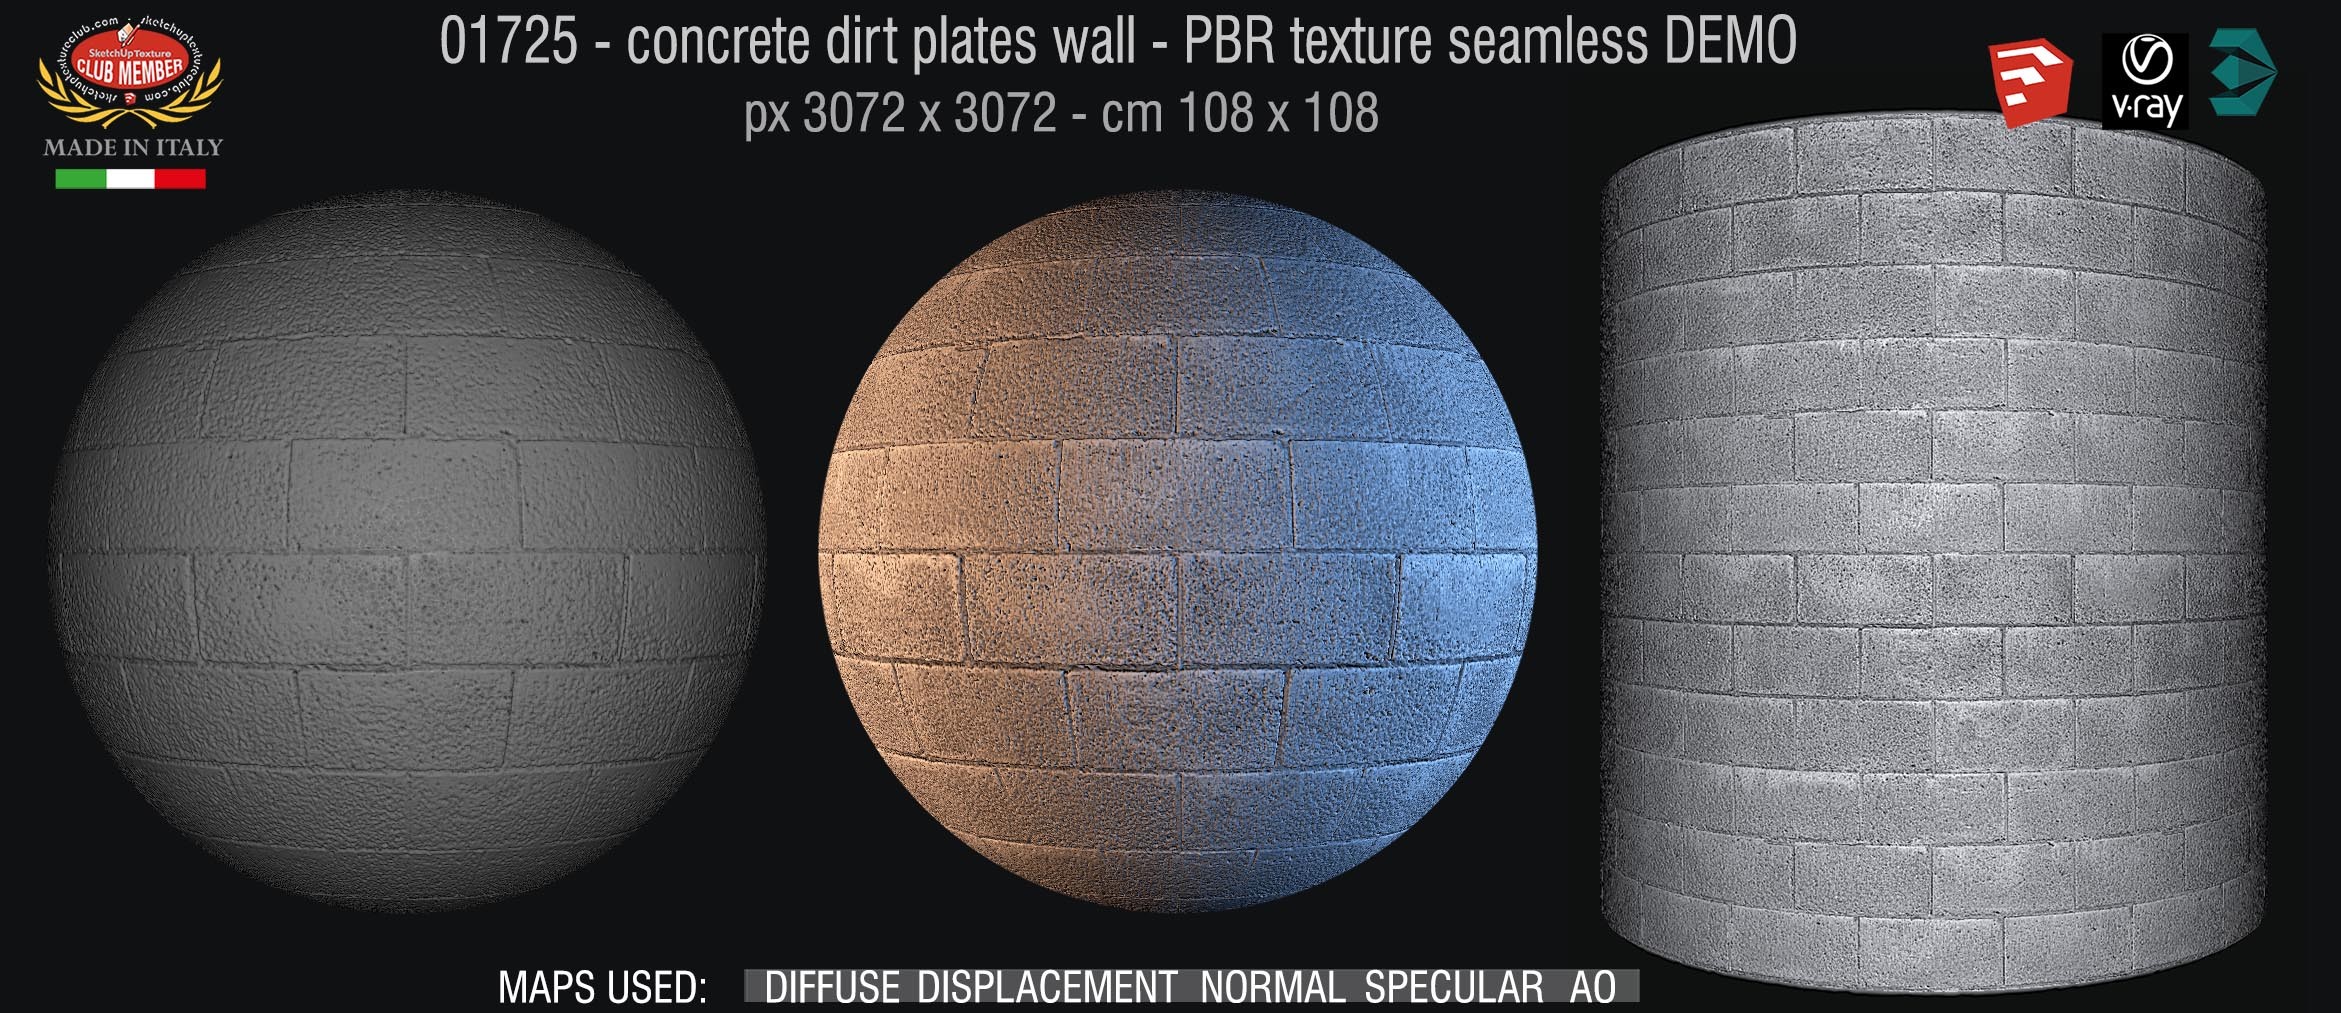 01725 concrete dirt plates wall PBR texture seamless DEMO